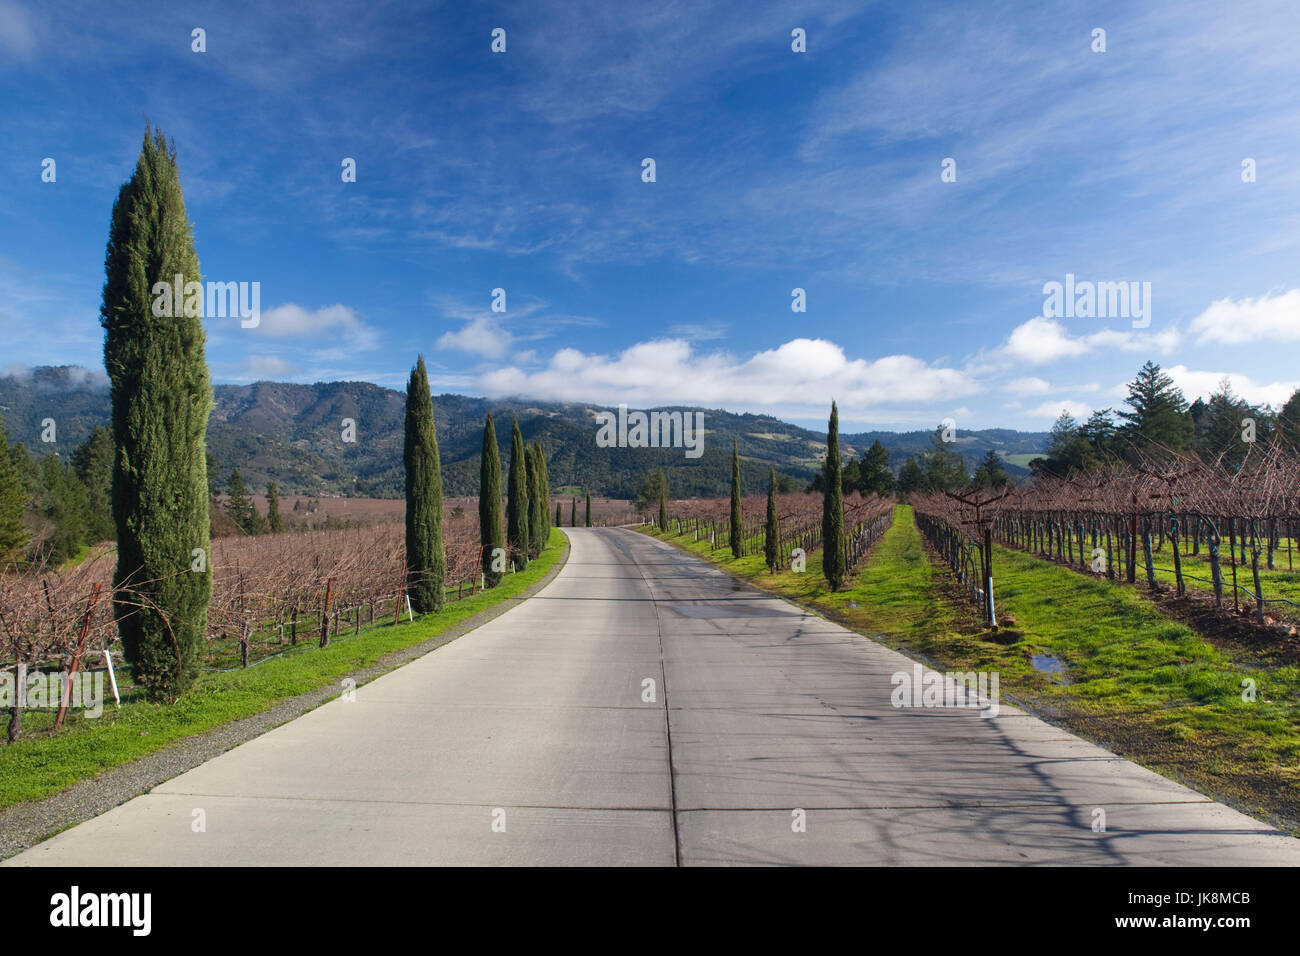 USA, California, Northern California, Napa Valley Wine Country, Calistoga, winery road Stock Photo